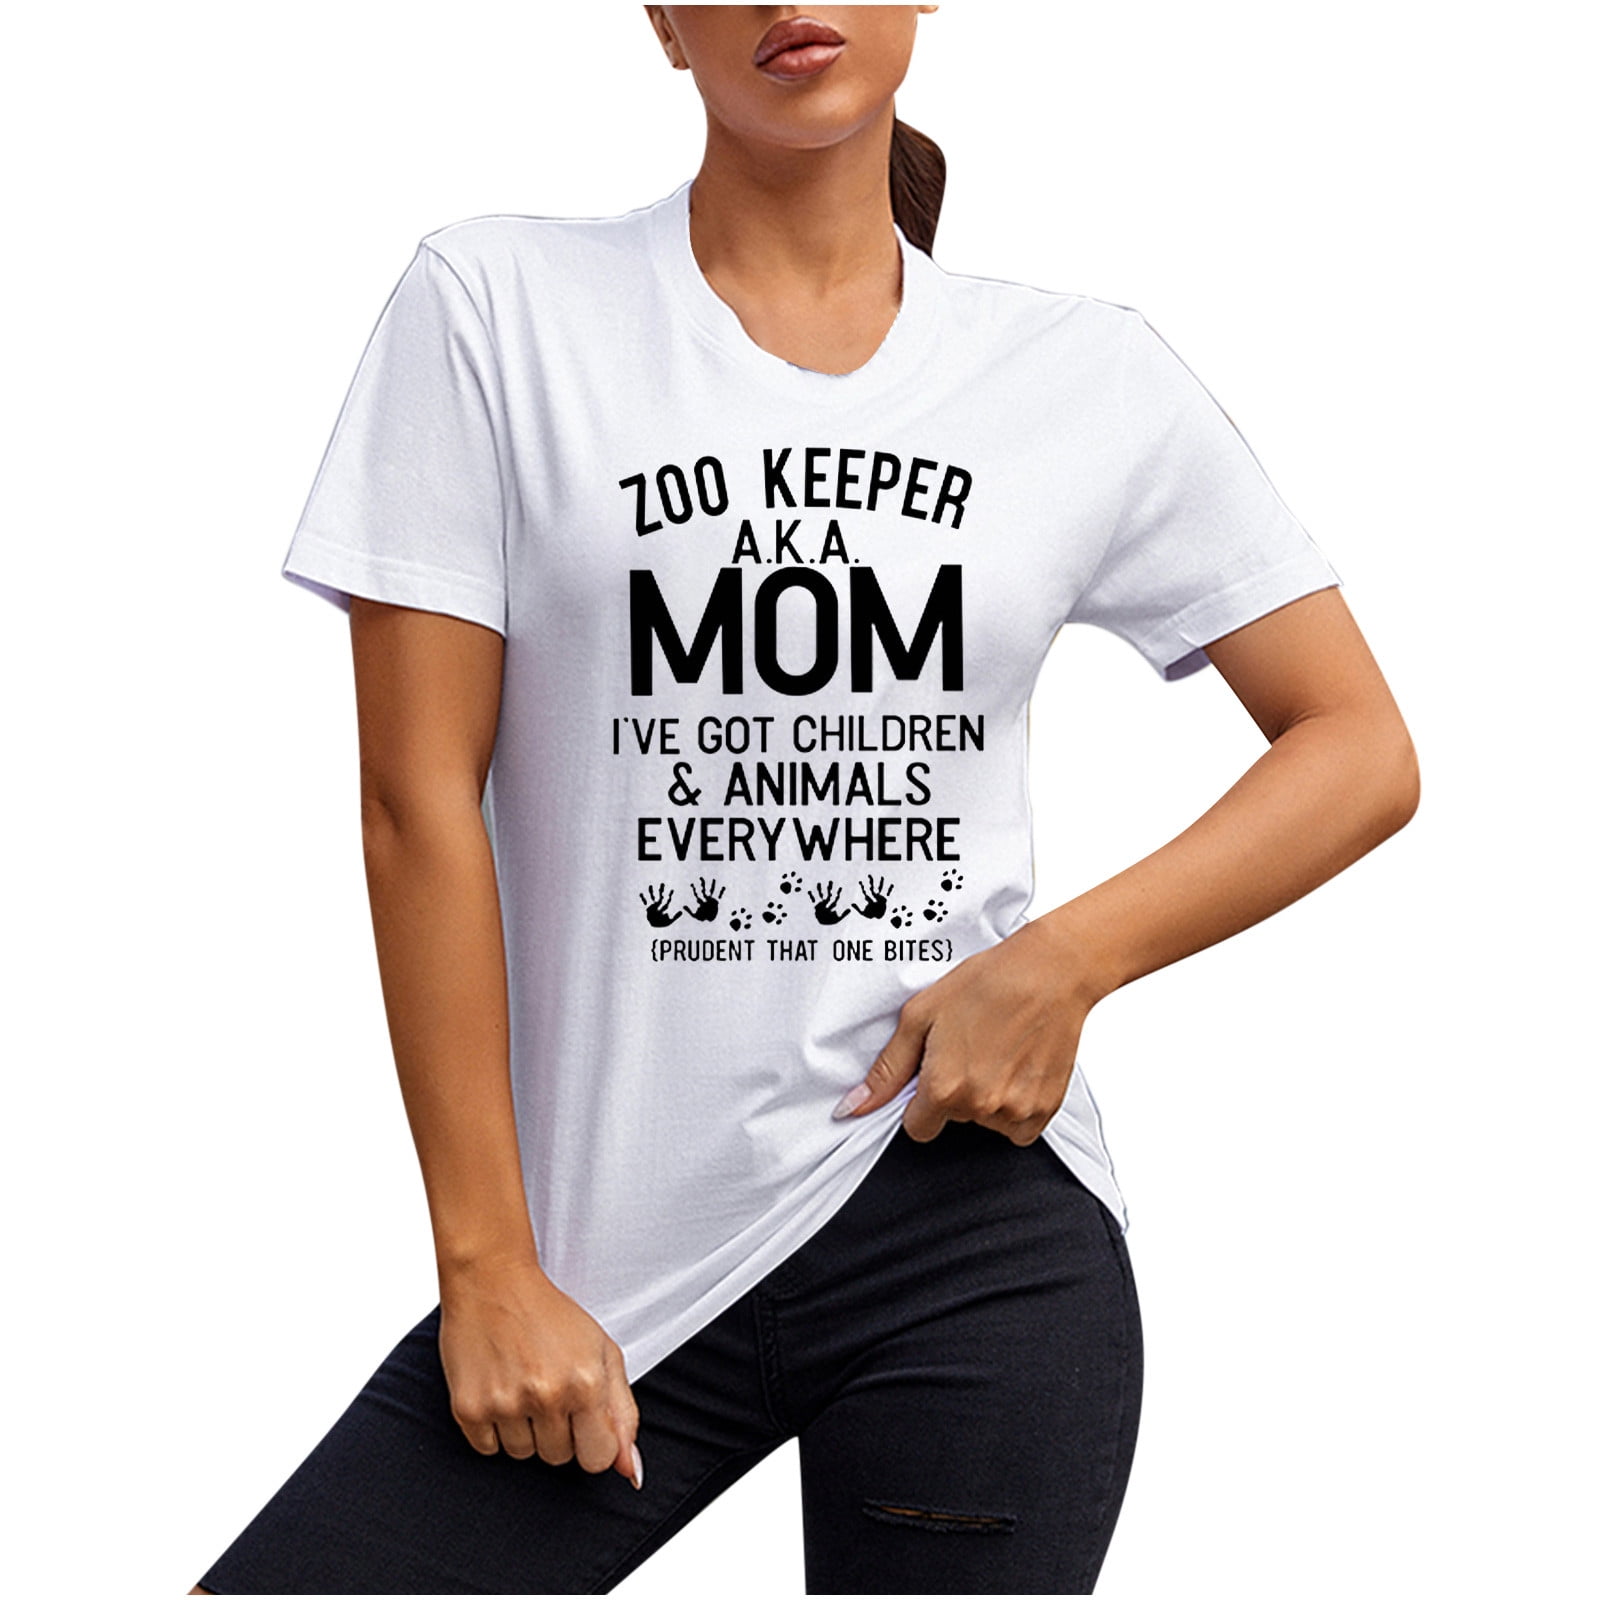 EveryWear Printed Crew-Neck T-Shirt for Women